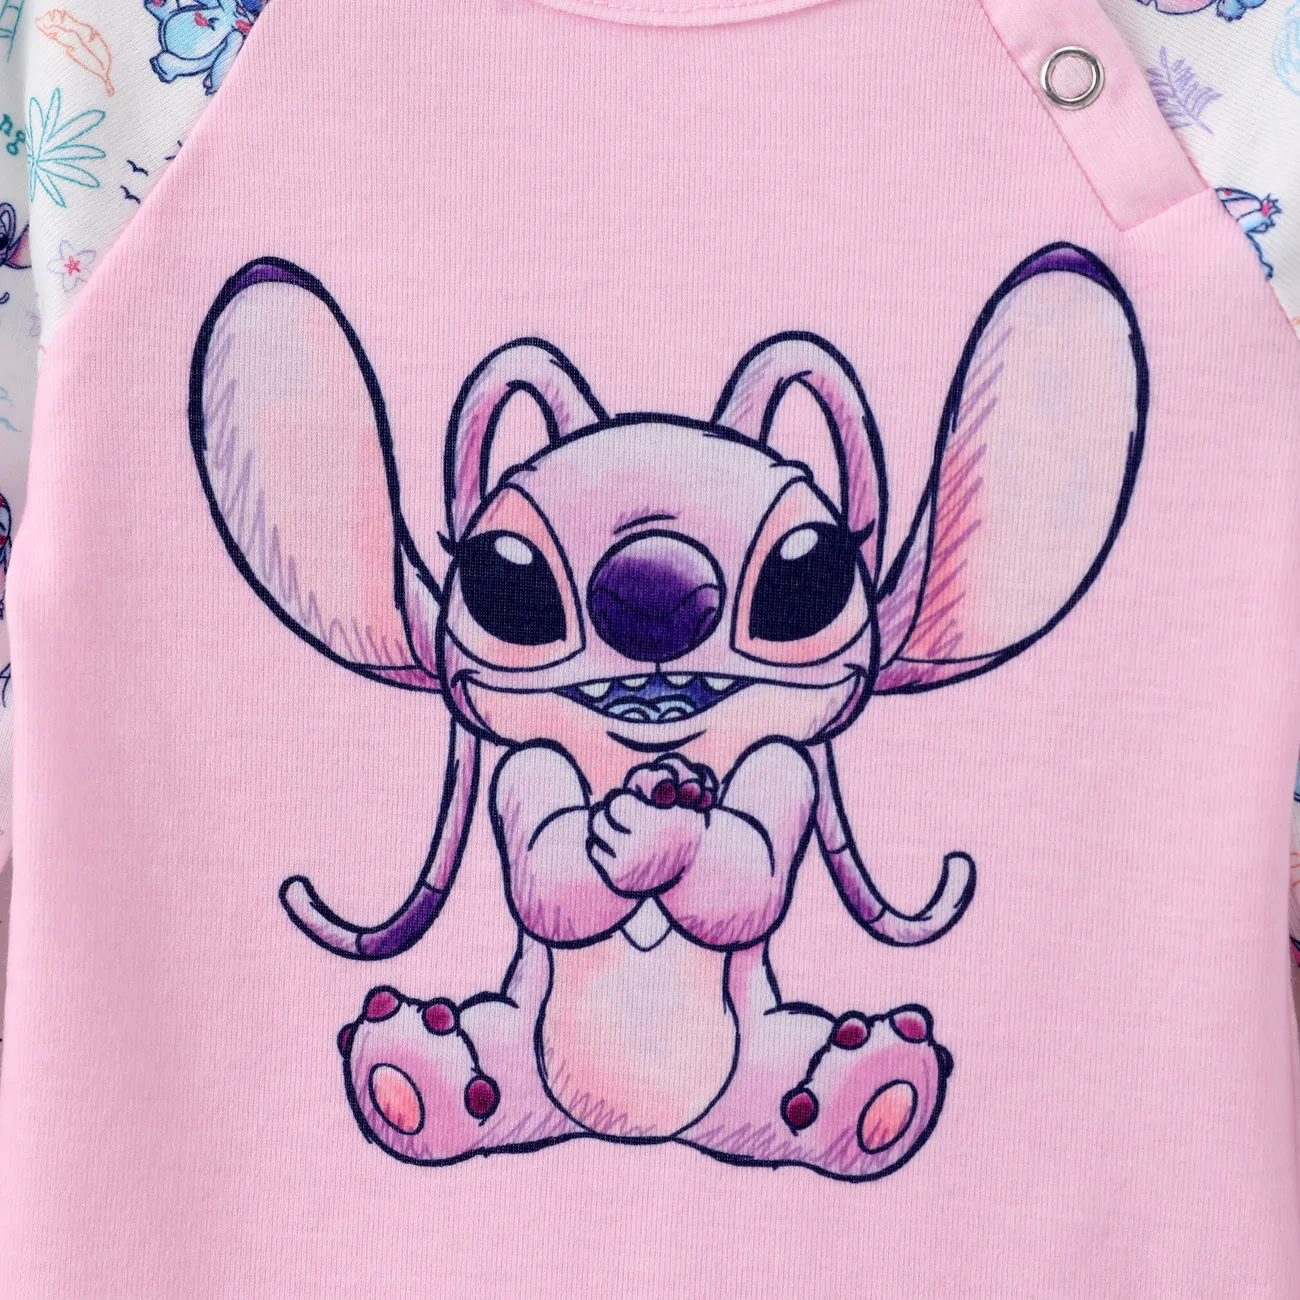 Disney Stitch Baby Boys/Girls 2pcs Naia™ Character Print Long-sleeve Romper with Pants Set Pink big image 1